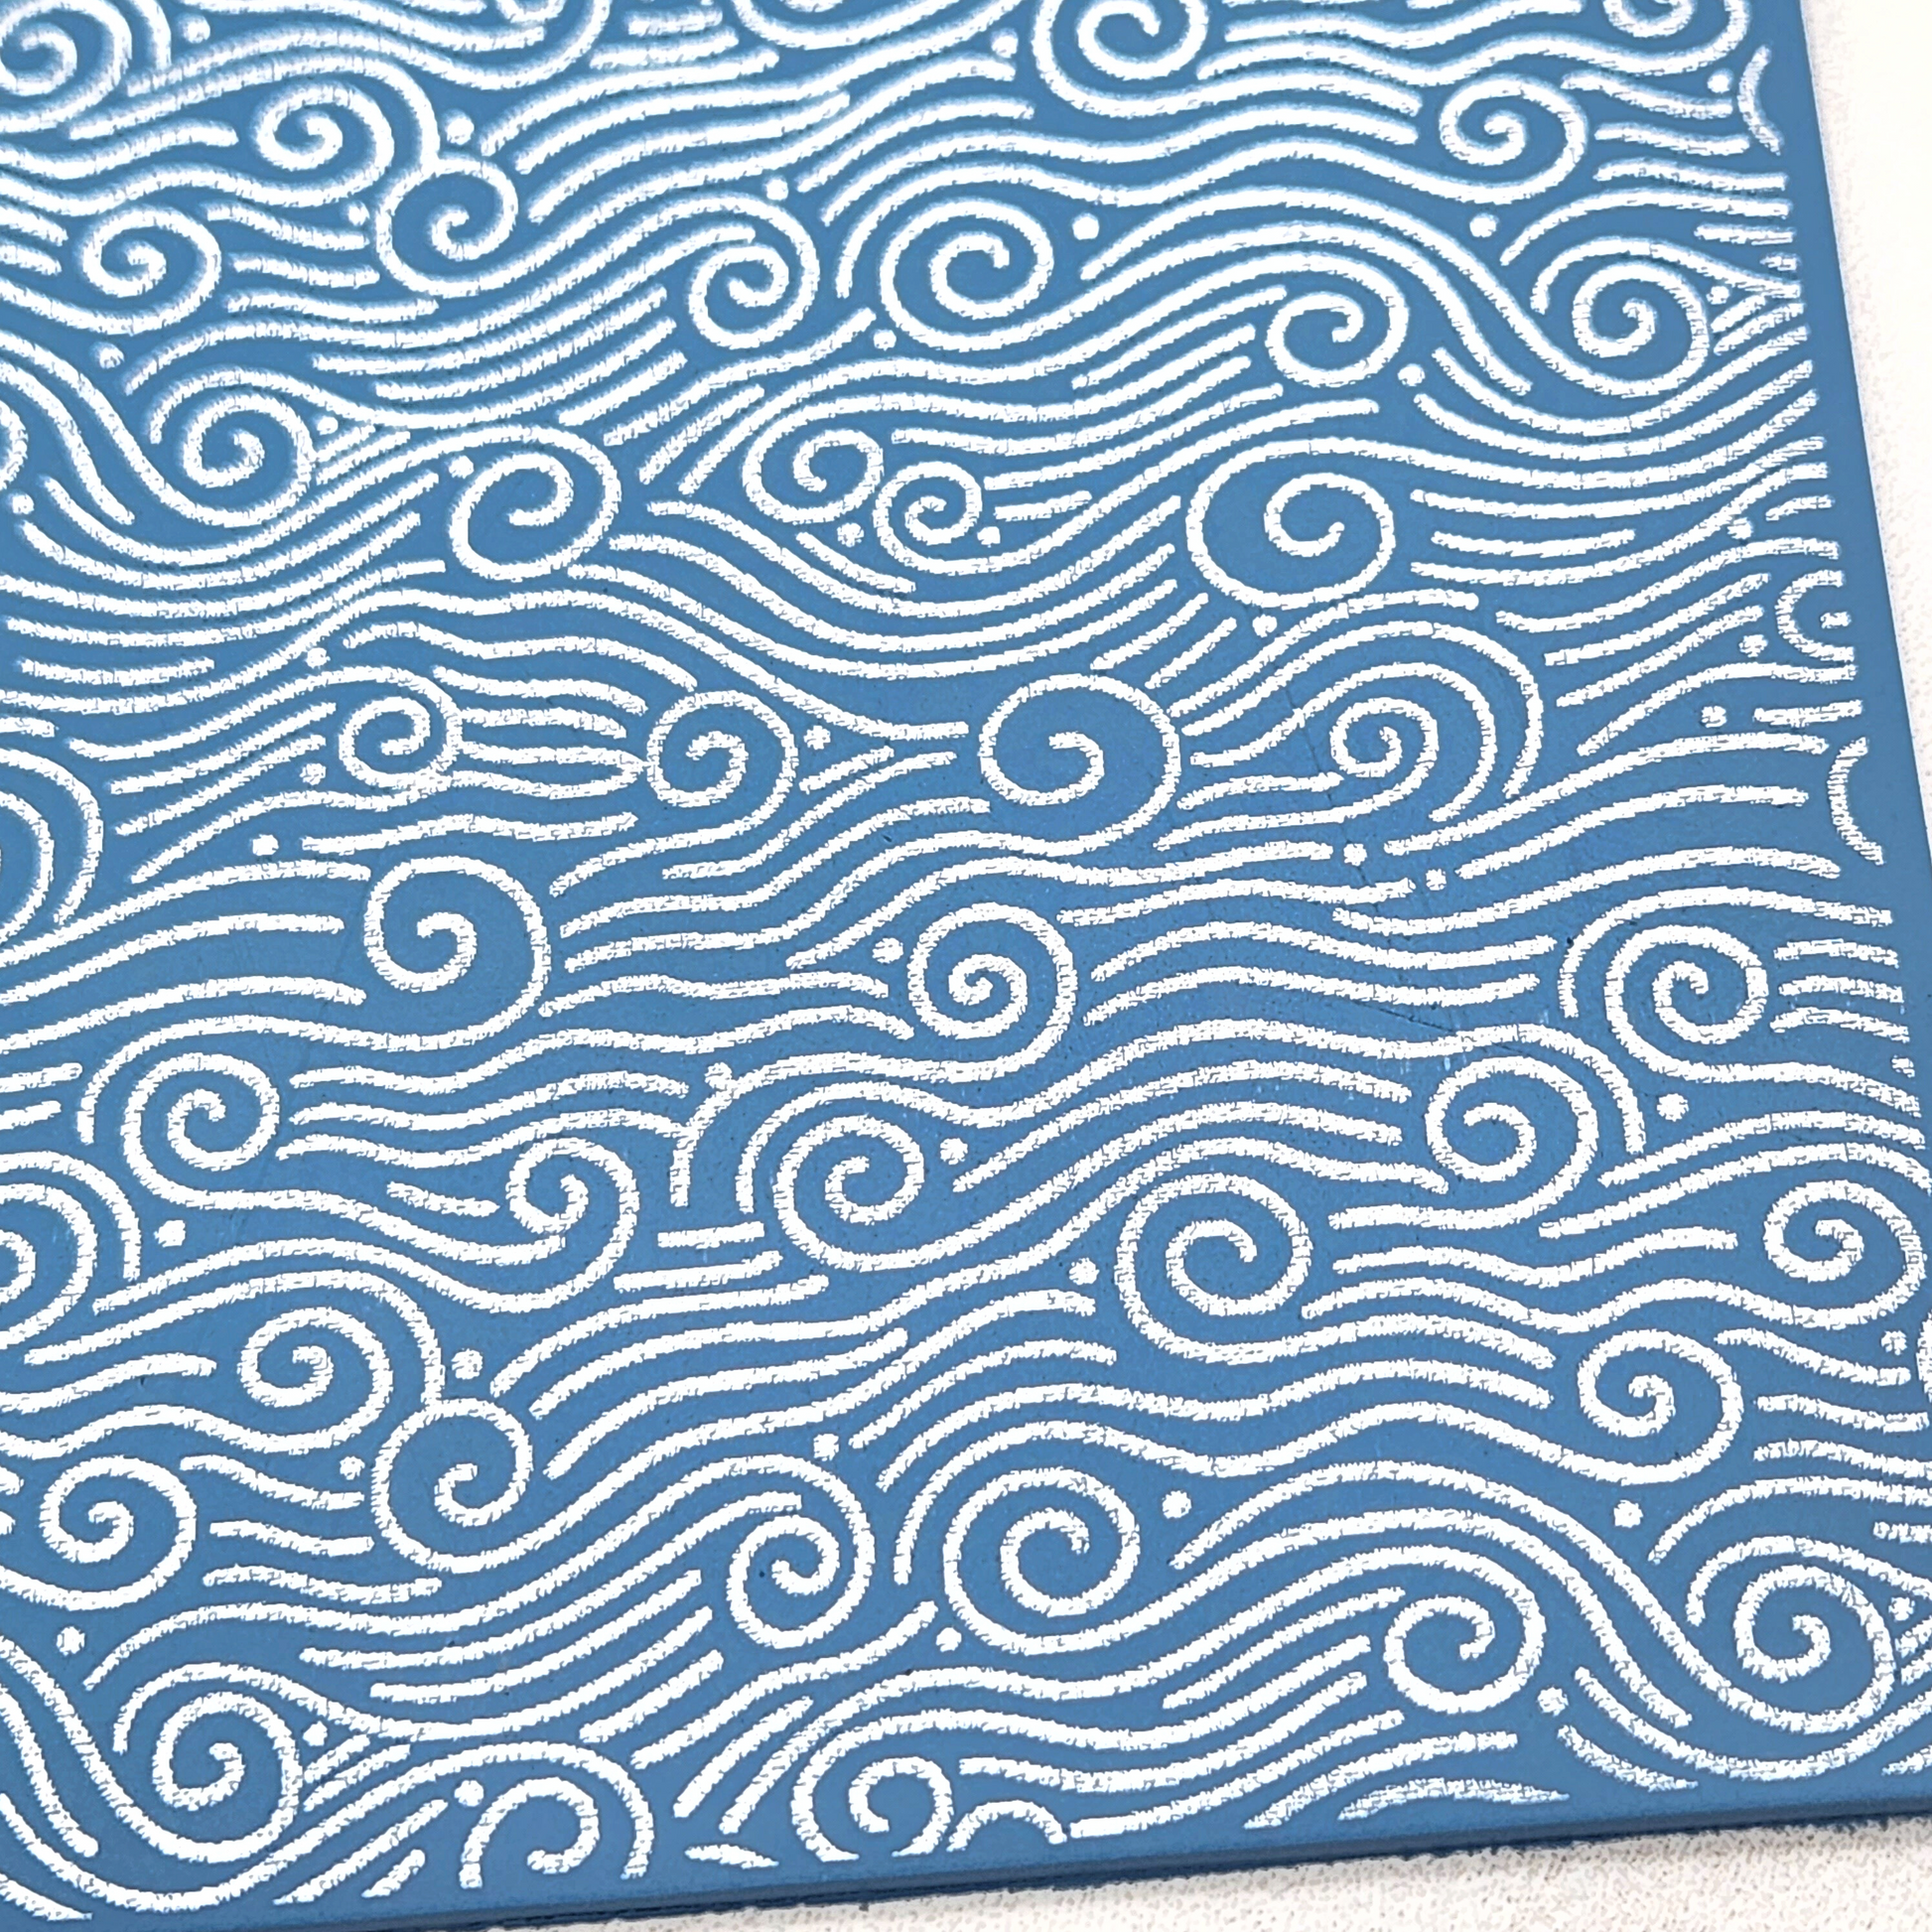 New Swirling Pattern Polymer Clay Texture Sheet Stamp Emboss Mat